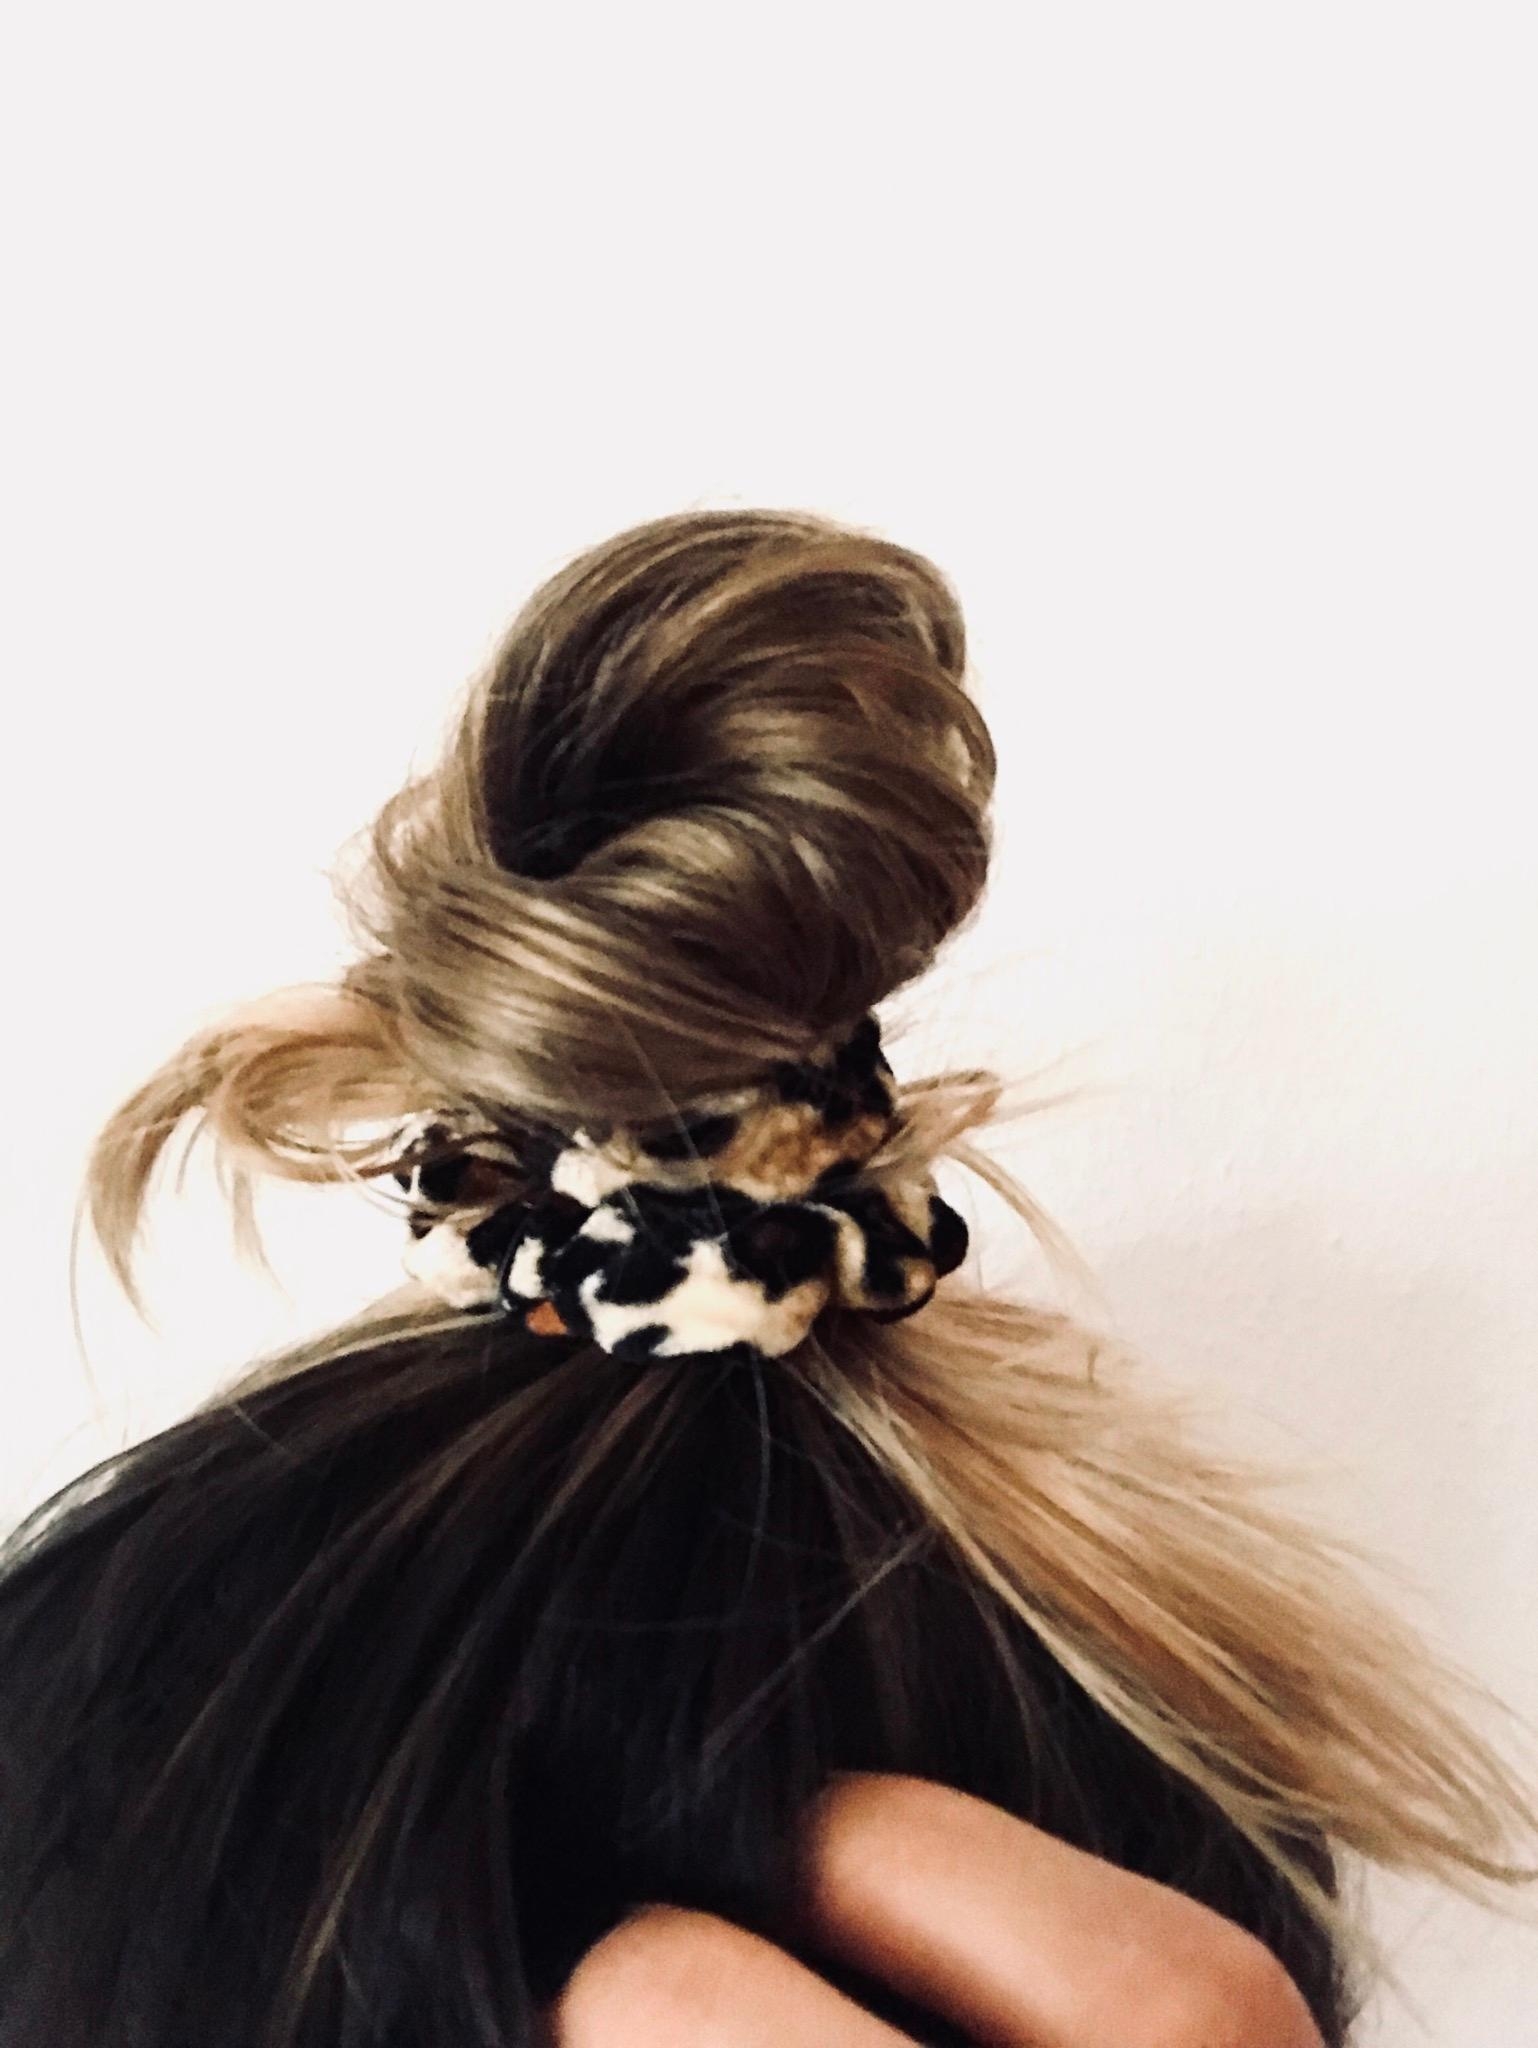 Ich sag ja: absolute Leoliebe 😉
#fashion #hair #scrunchie #90srevival #leo #dutt #messybun